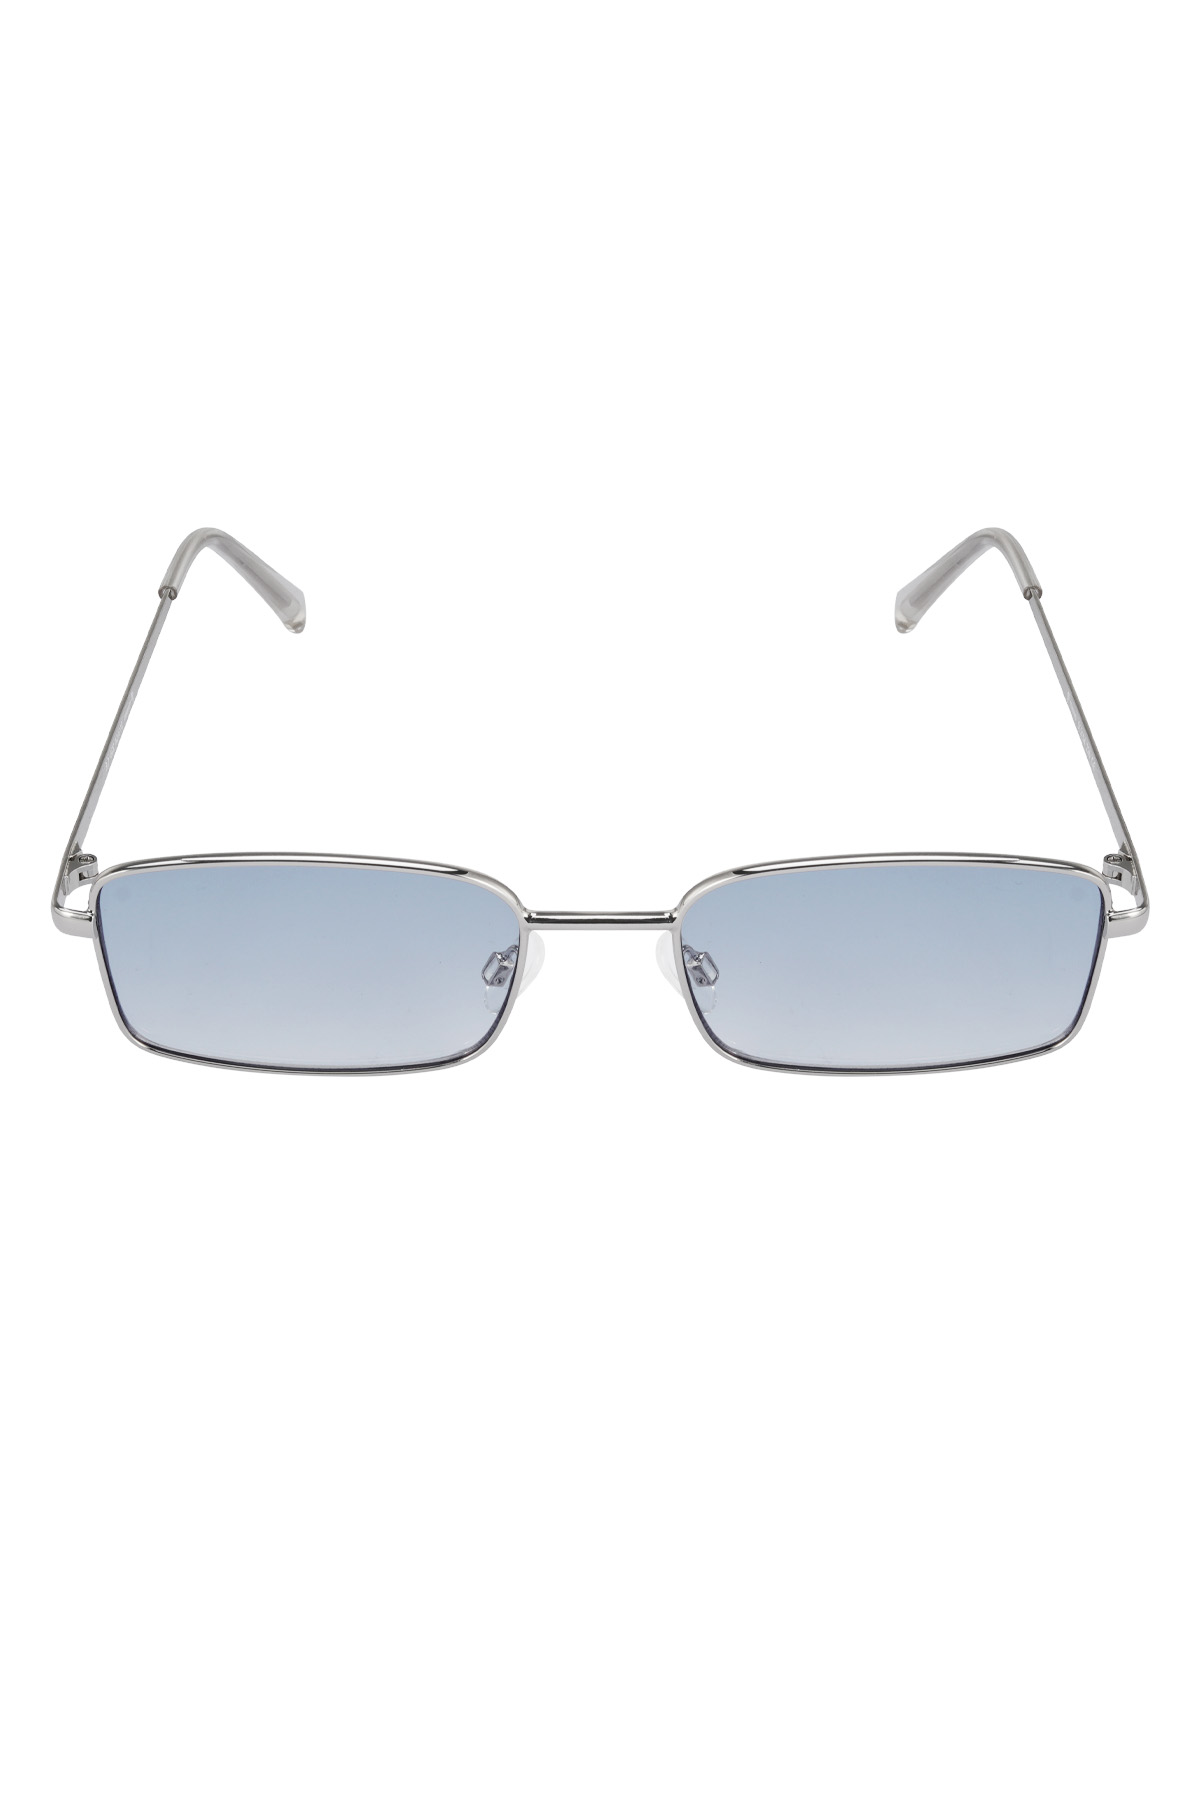 Sunglasses radiant view - light blue Picture4